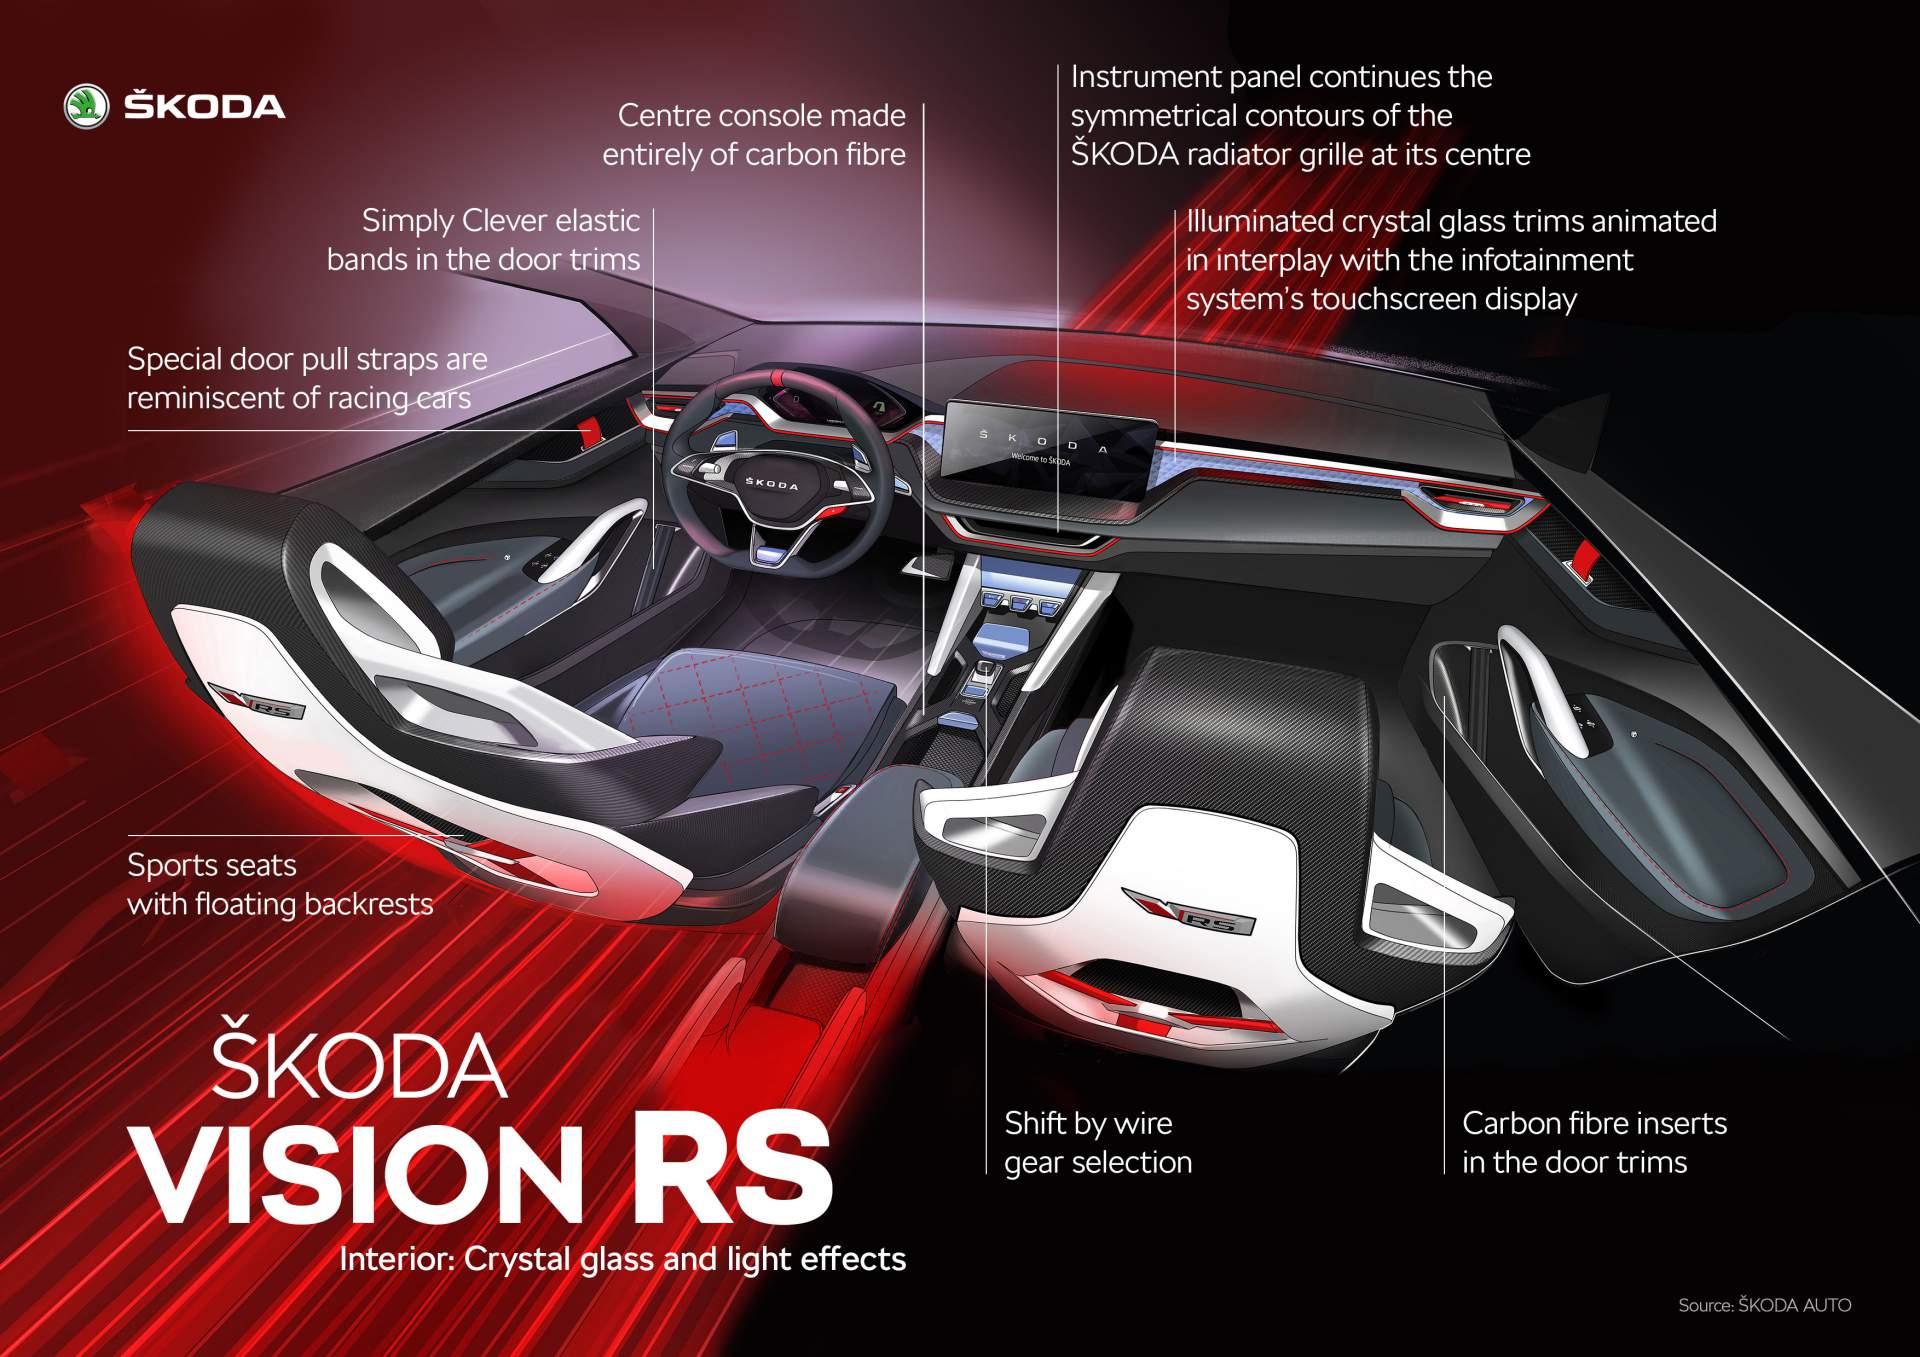 f8f32db5-skoda-vision-rs-concept-infographic-2.jpg